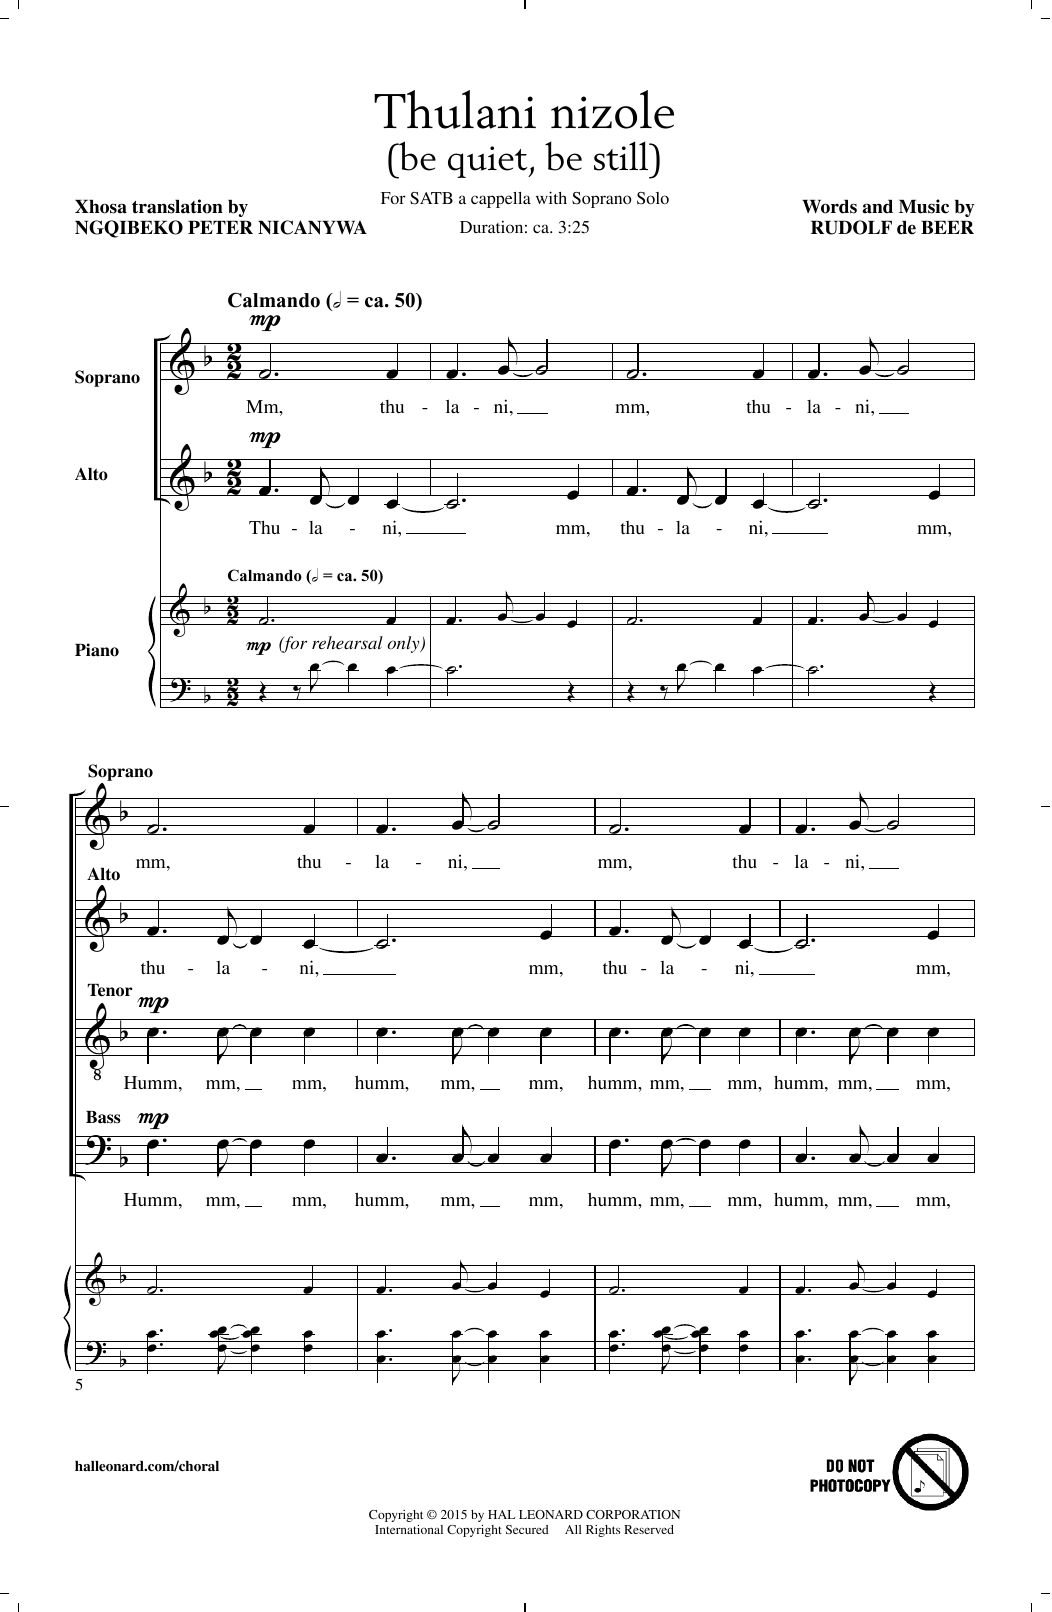 Rudolf de Beer Thulani Nizole Sheet Music Notes & Chords for SATB - Download or Print PDF